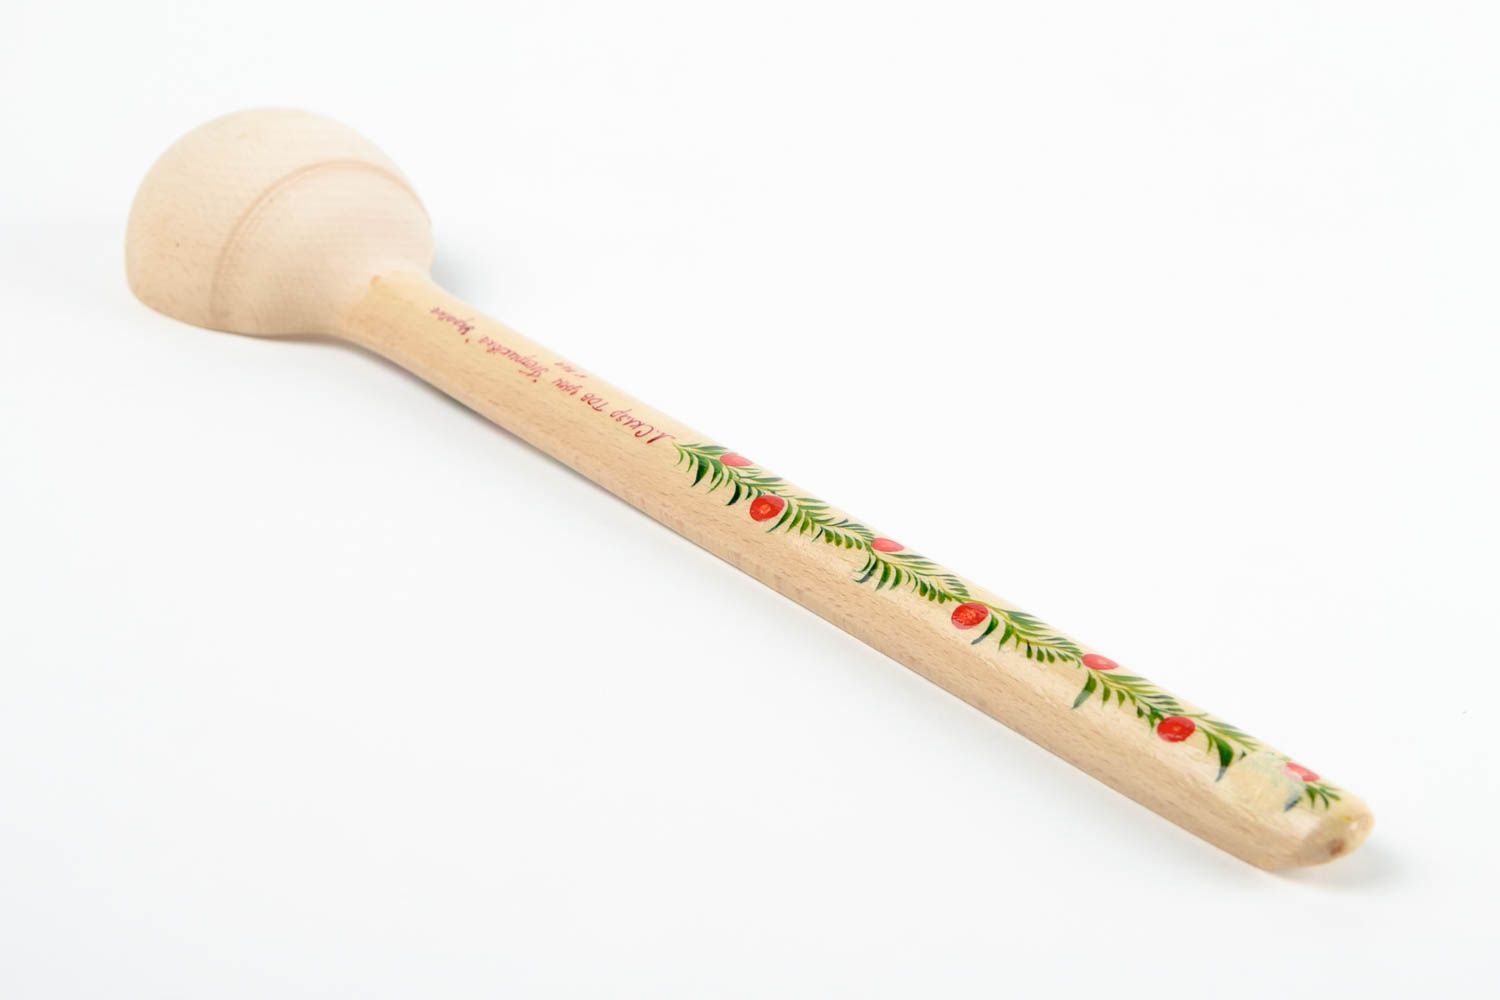 Handmade spoon wooden spoon unusual cutlery for kitchen decor gift ideas photo 5